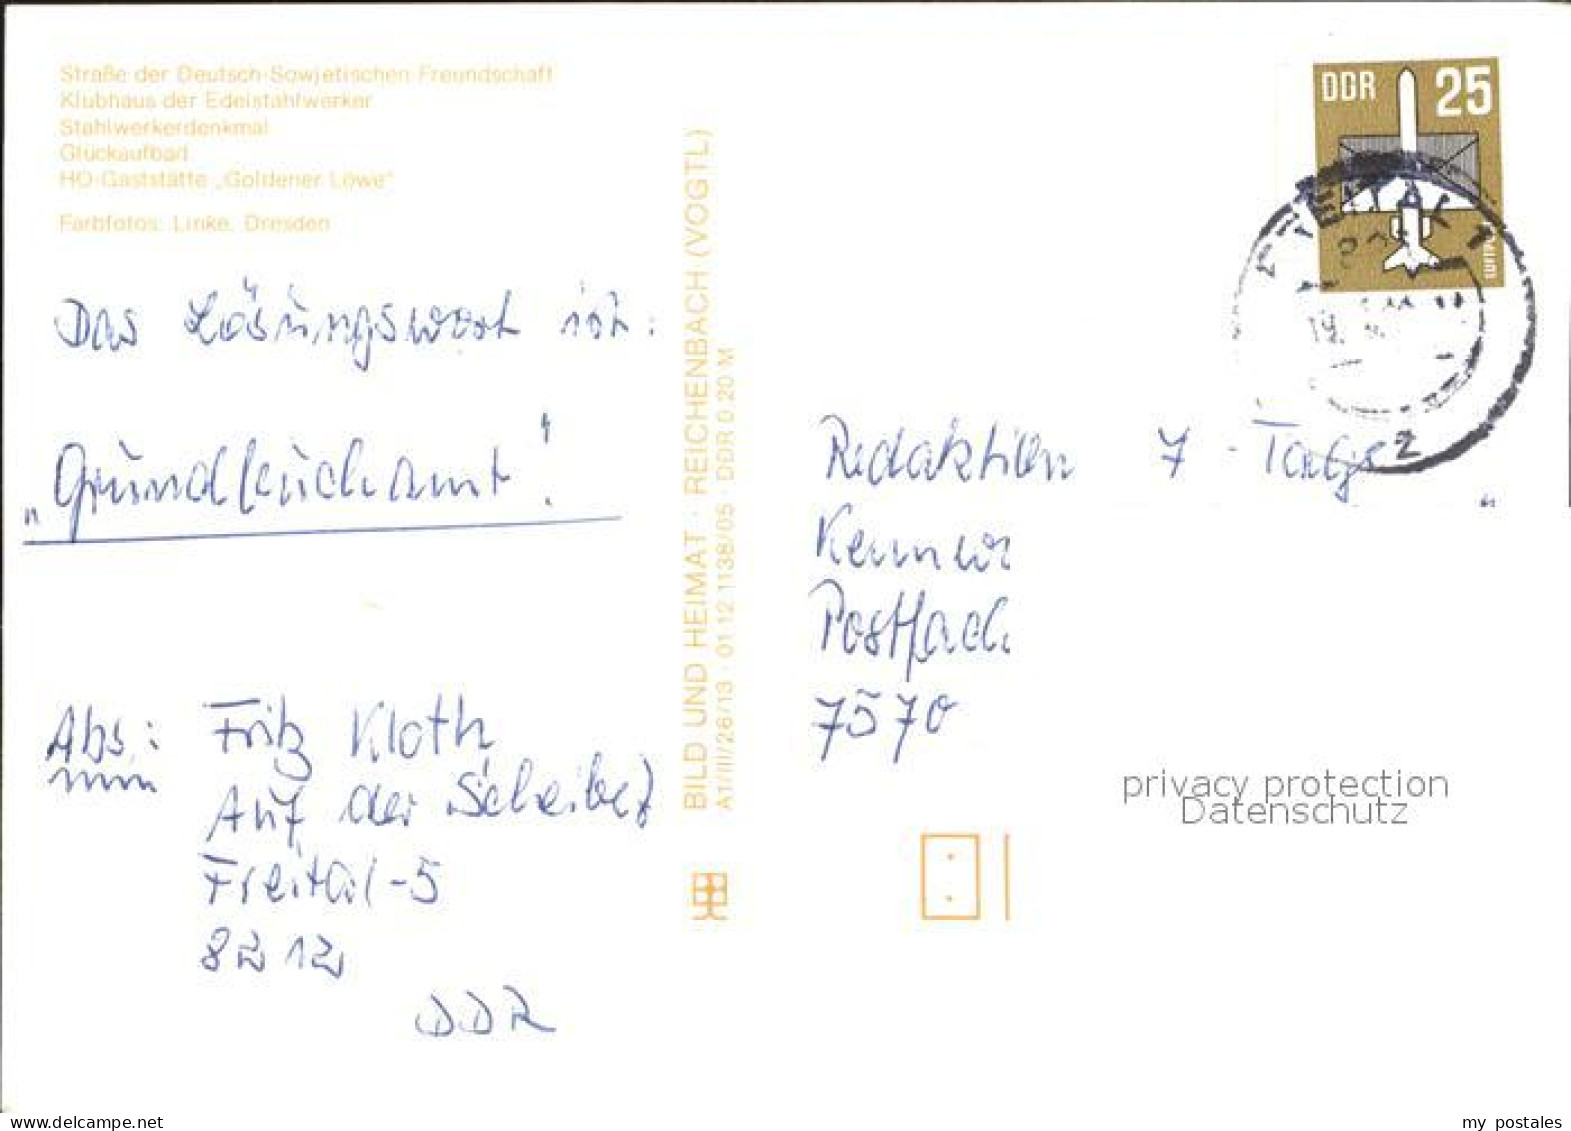 72379227 Freital Klubhaus Edelstahlwerker Glueckaufbad Stahlwerkerdenkmal Freita - Freital